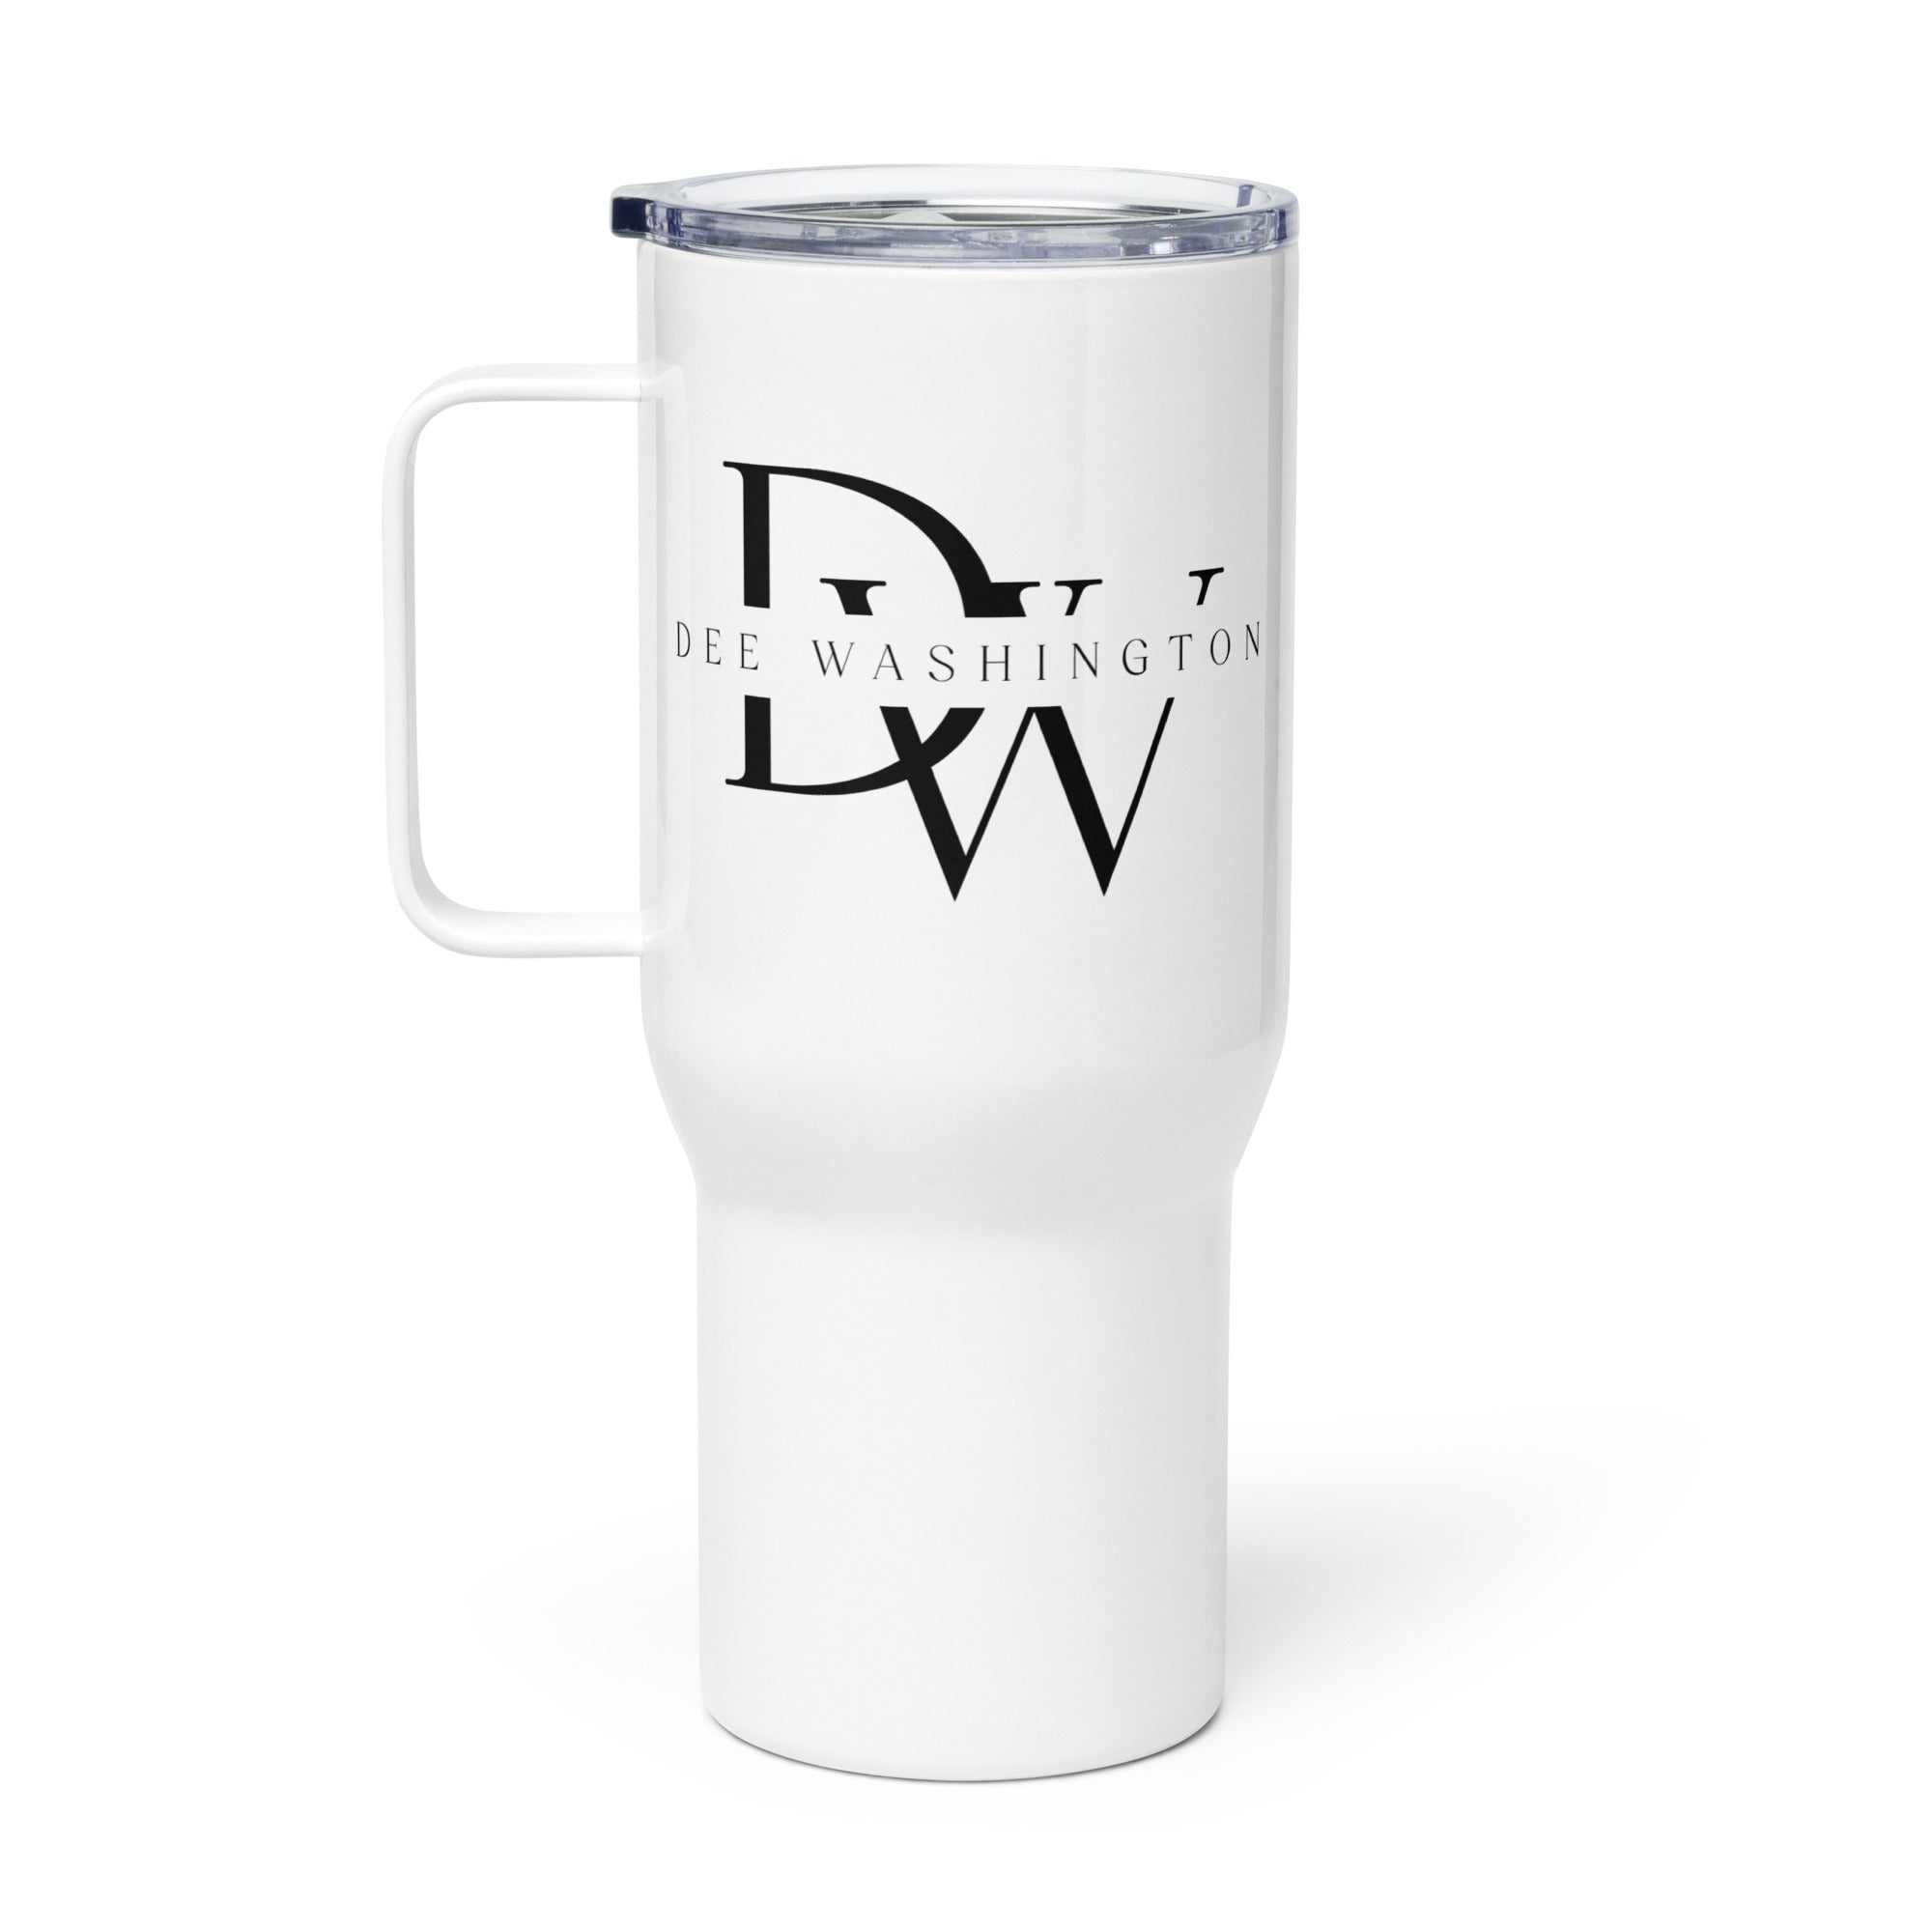 Dee Washington - Travel mug with a handle